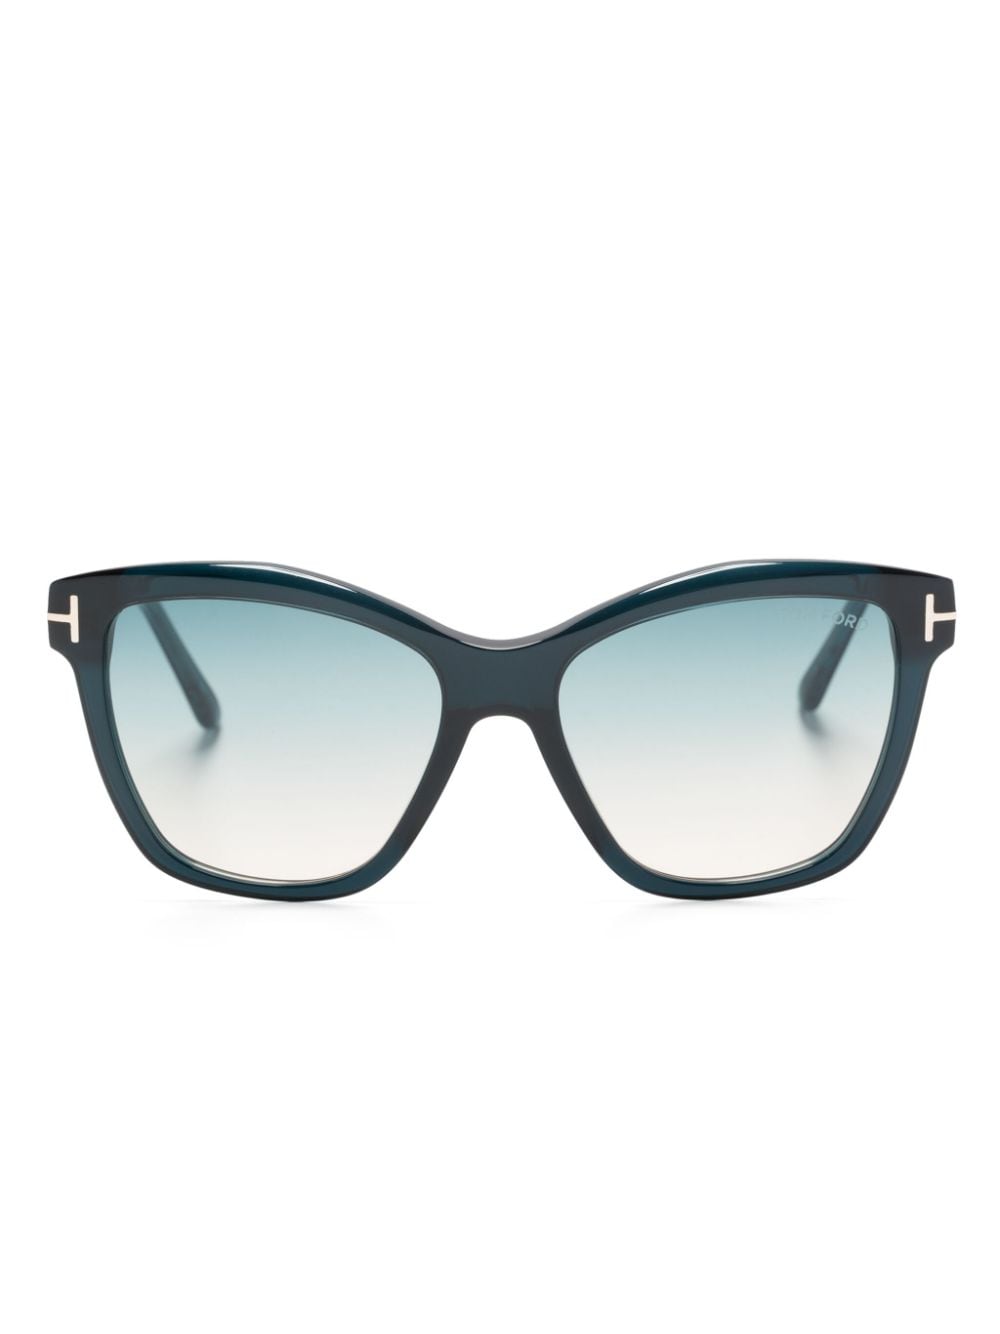 TOM FORD Eyewear Eckige Sonnenbrille - Blau von TOM FORD Eyewear